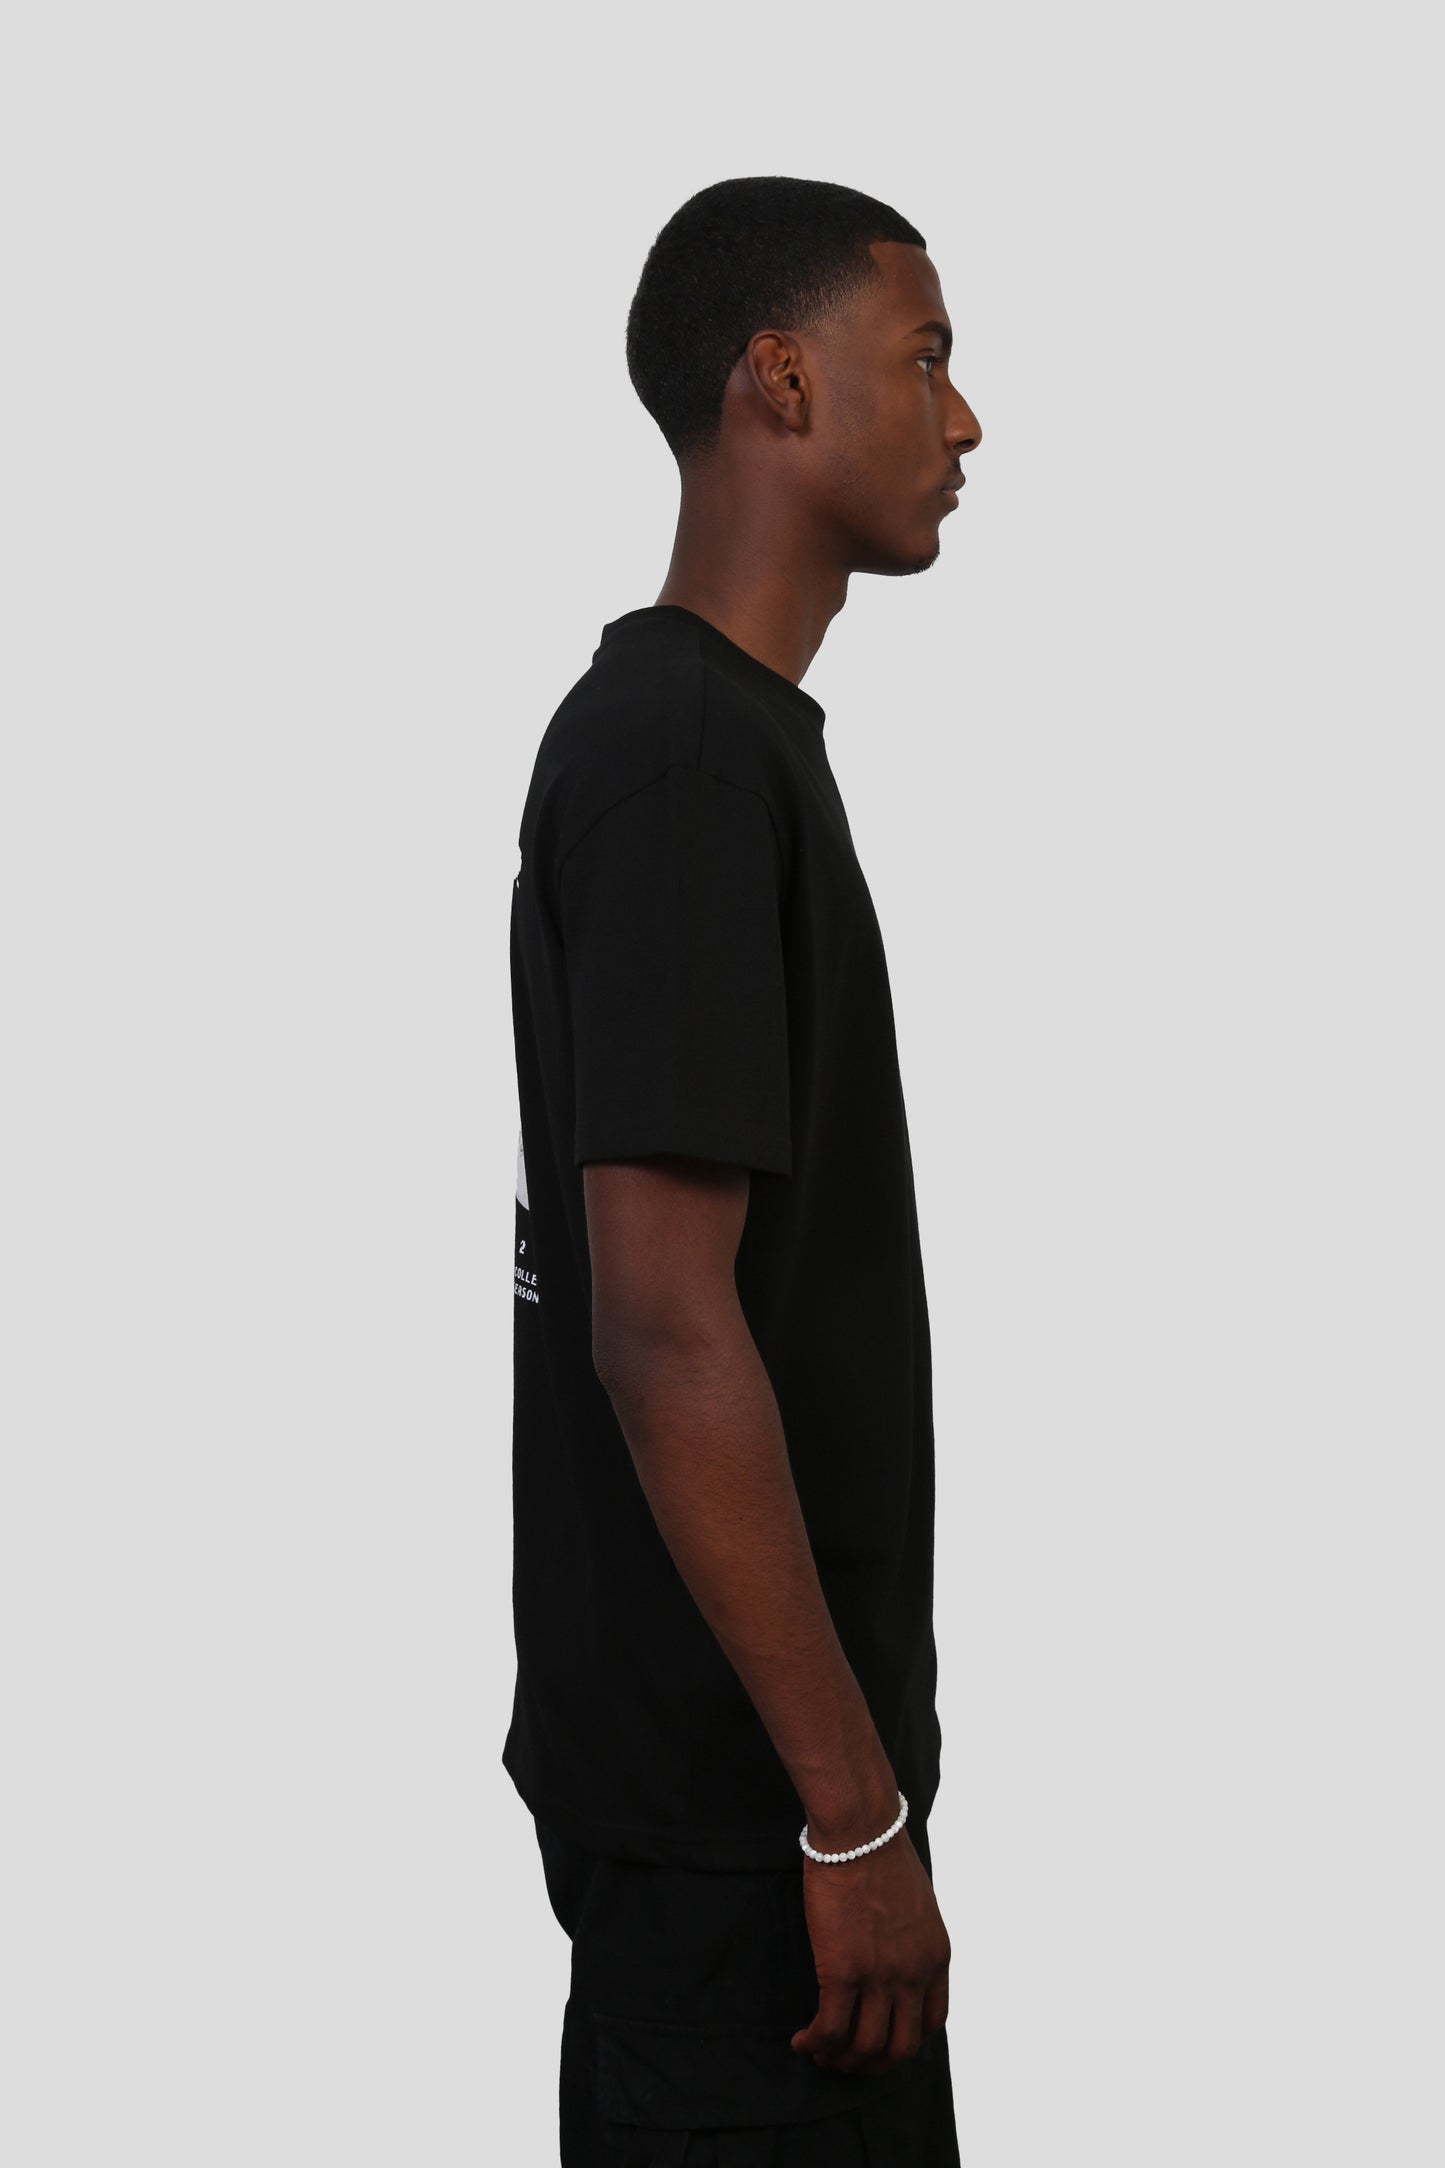 www.ninetyninestudios.de| GAME OVER T-SHIRT BLACK| T-Shirt | €34.99 | Revolutionary Islamic Streetwear | 99Studios